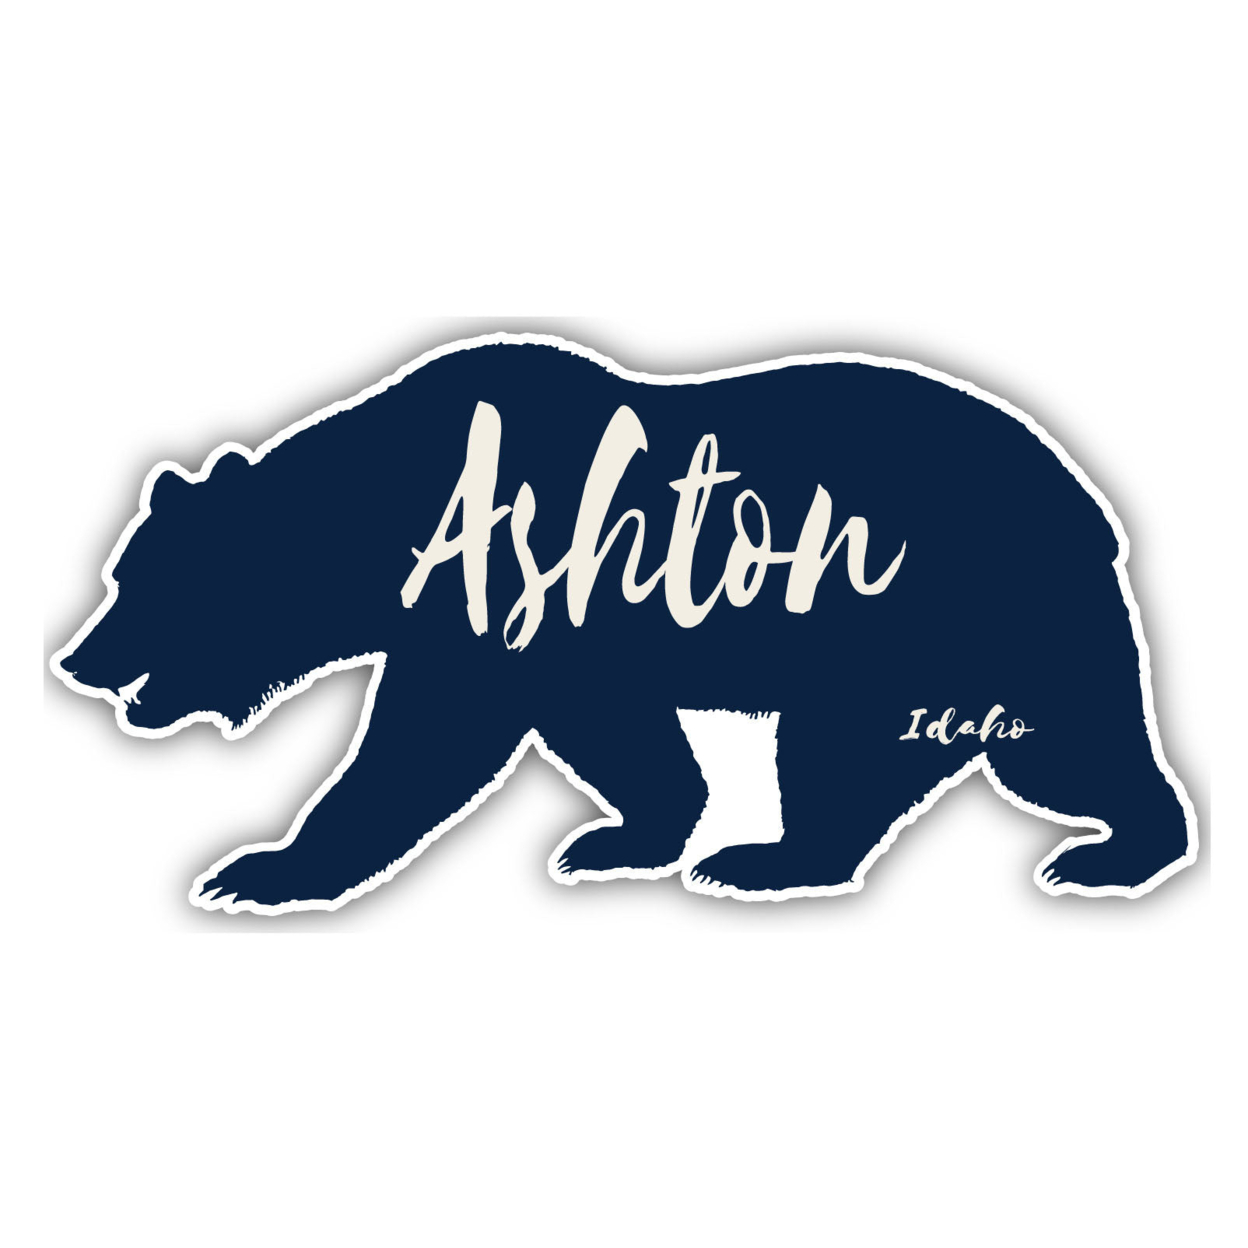 Ashton Idaho Souvenir Decorative Stickers (Choose Theme And Size) - Single Unit, 10-Inch, Tent